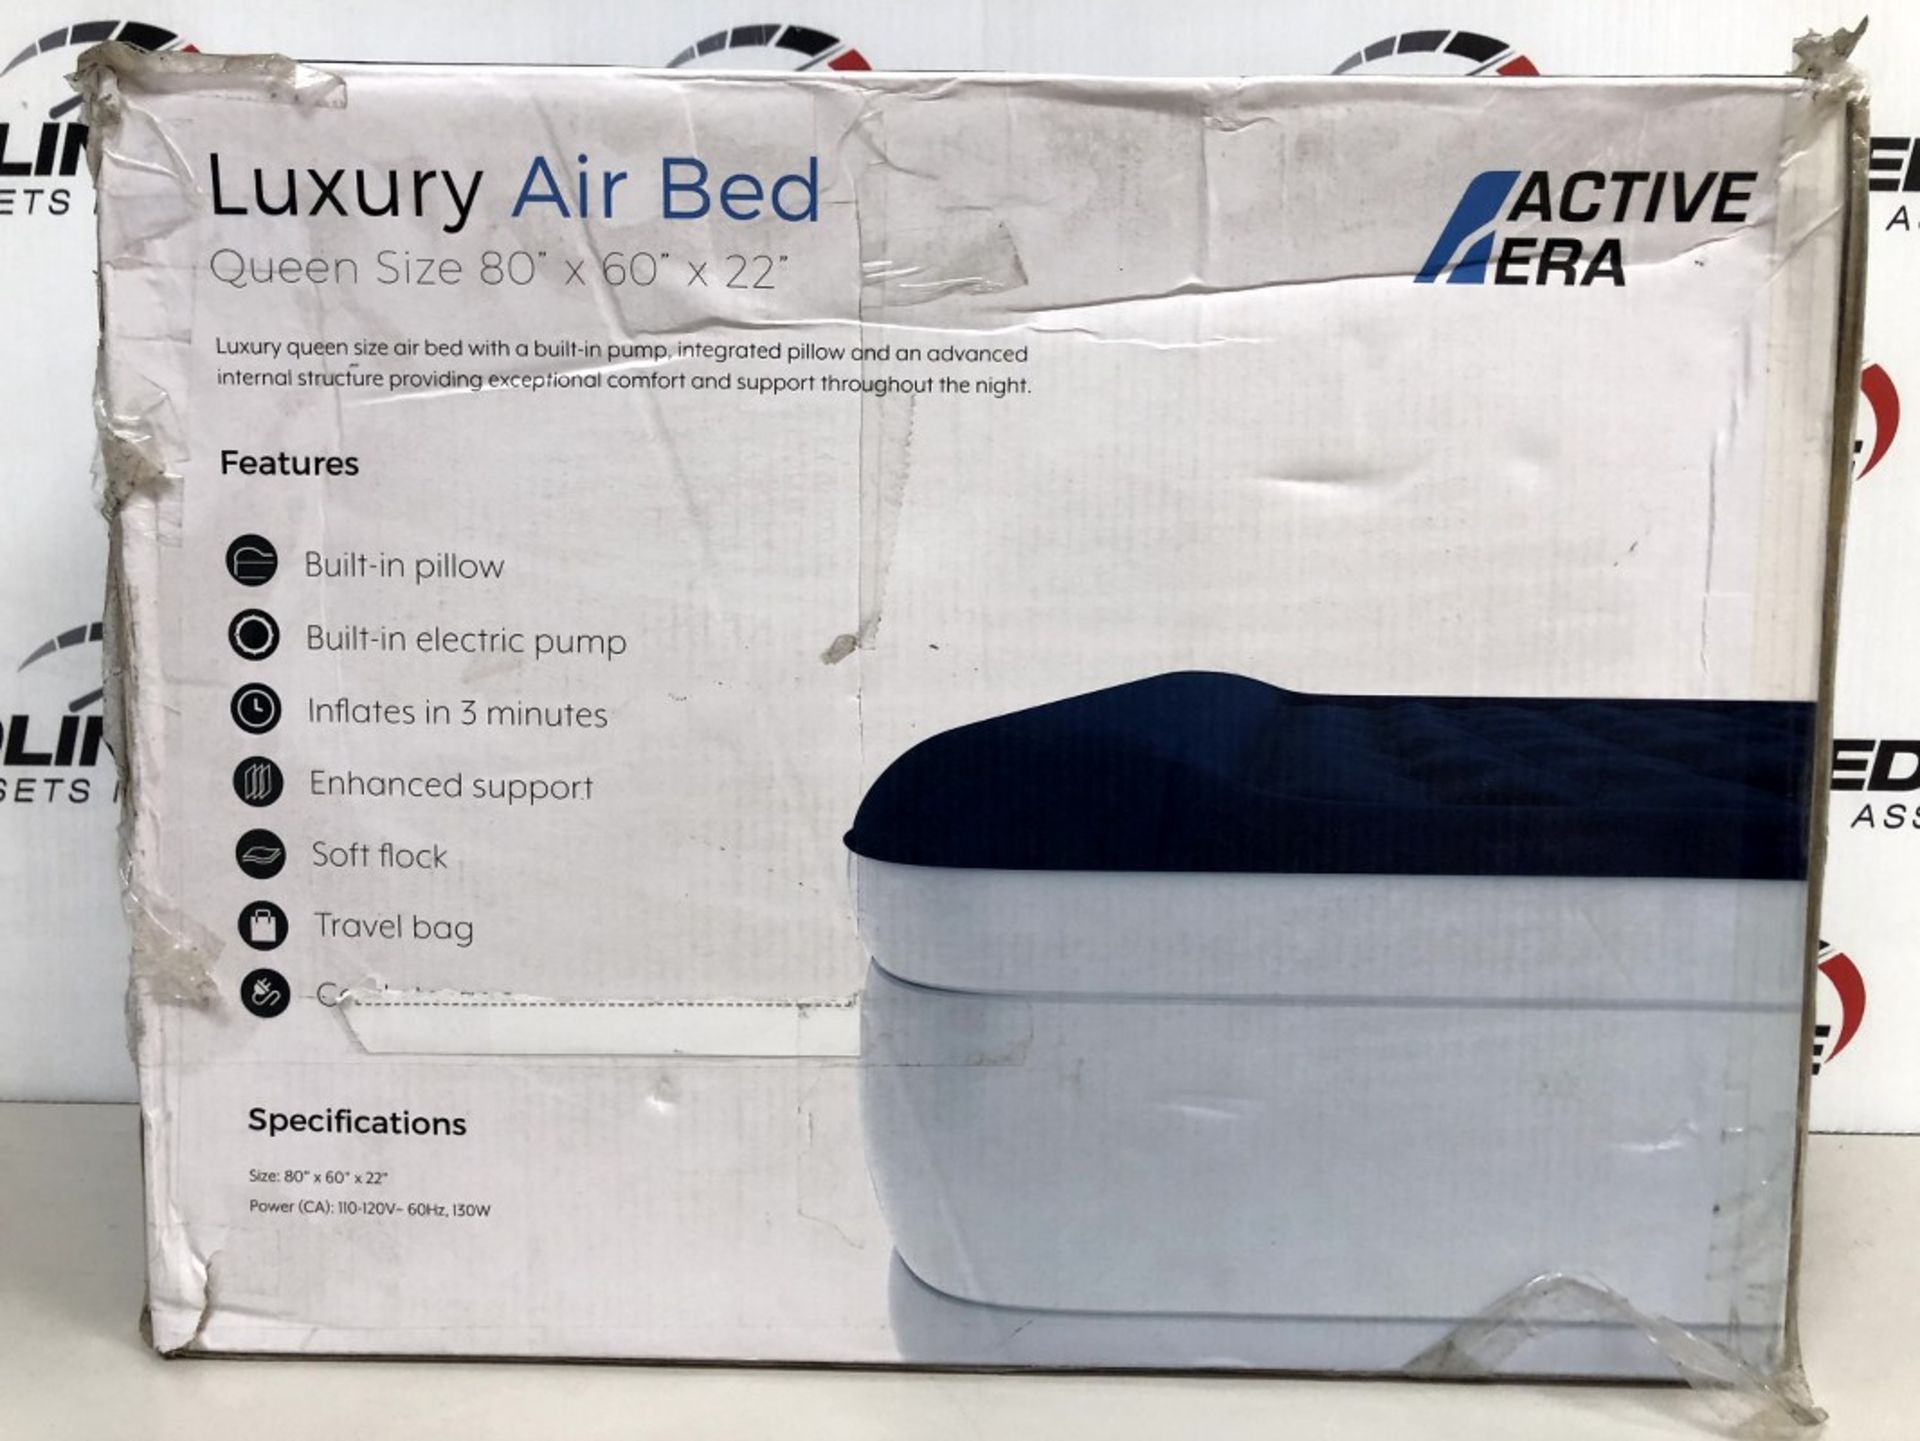 Active Era - Luxury Air Bed Mattress - Queen Size - Image 2 of 2